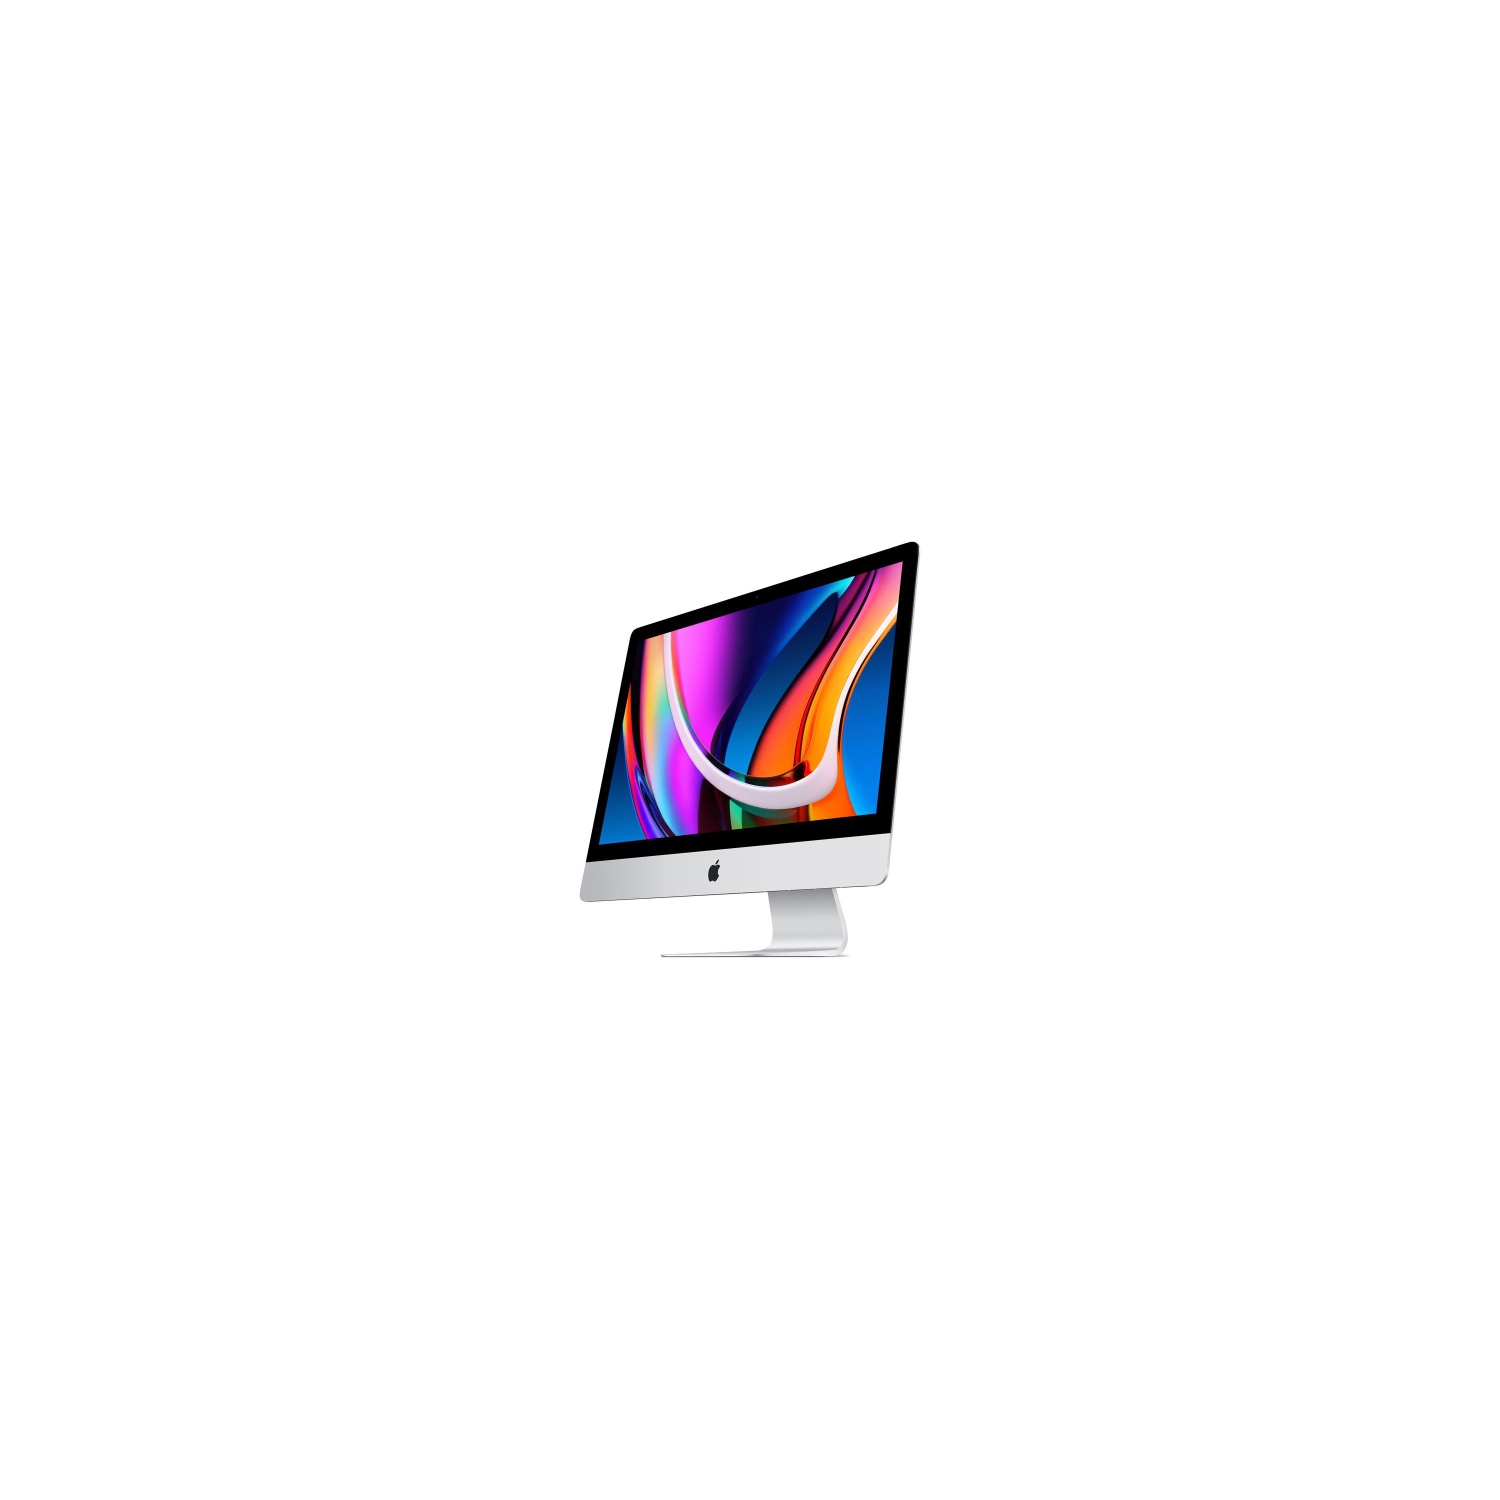 Open Box - Apple iMac 27" Retina 5K Computer (MXWT2LL/A) - 2020 Model - Intel Core i5 Hexa-Core 10th Gen 3.1GHz, 8GB RAM, 256GB SSD